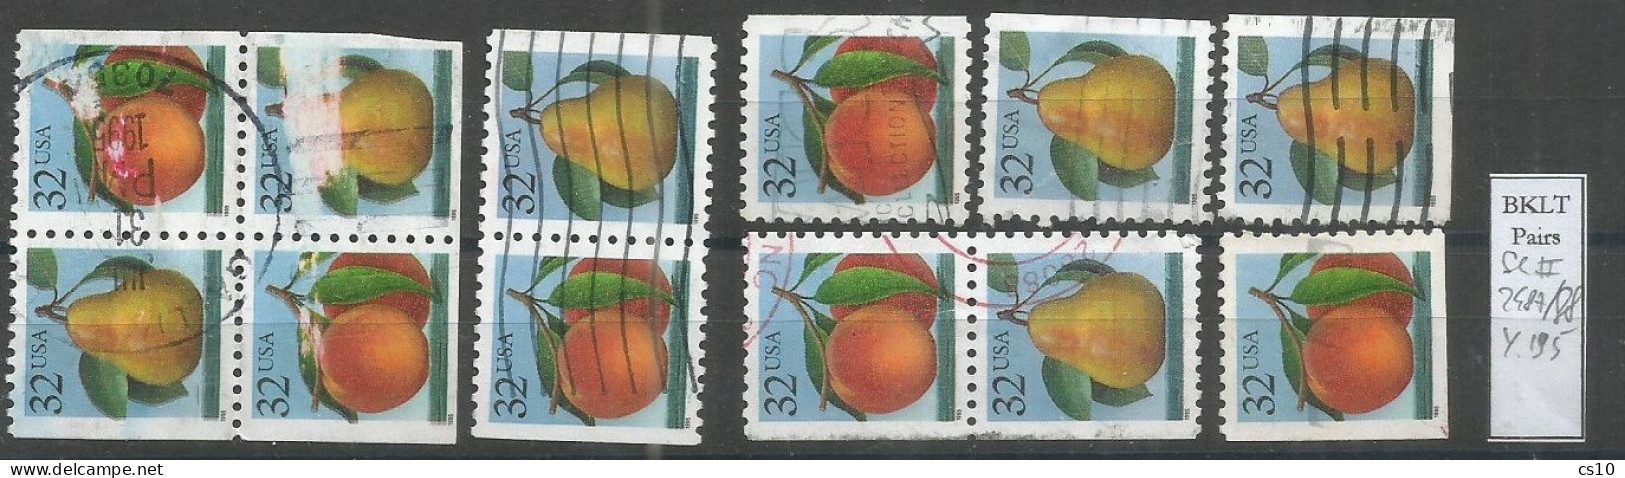 USA 1995 Peach & Pear C.32 SC.# 2487/88 Cpl Issue L/R On 2/3 Sides + BKLT Pair & Part Of Pane - 3. 1981-...